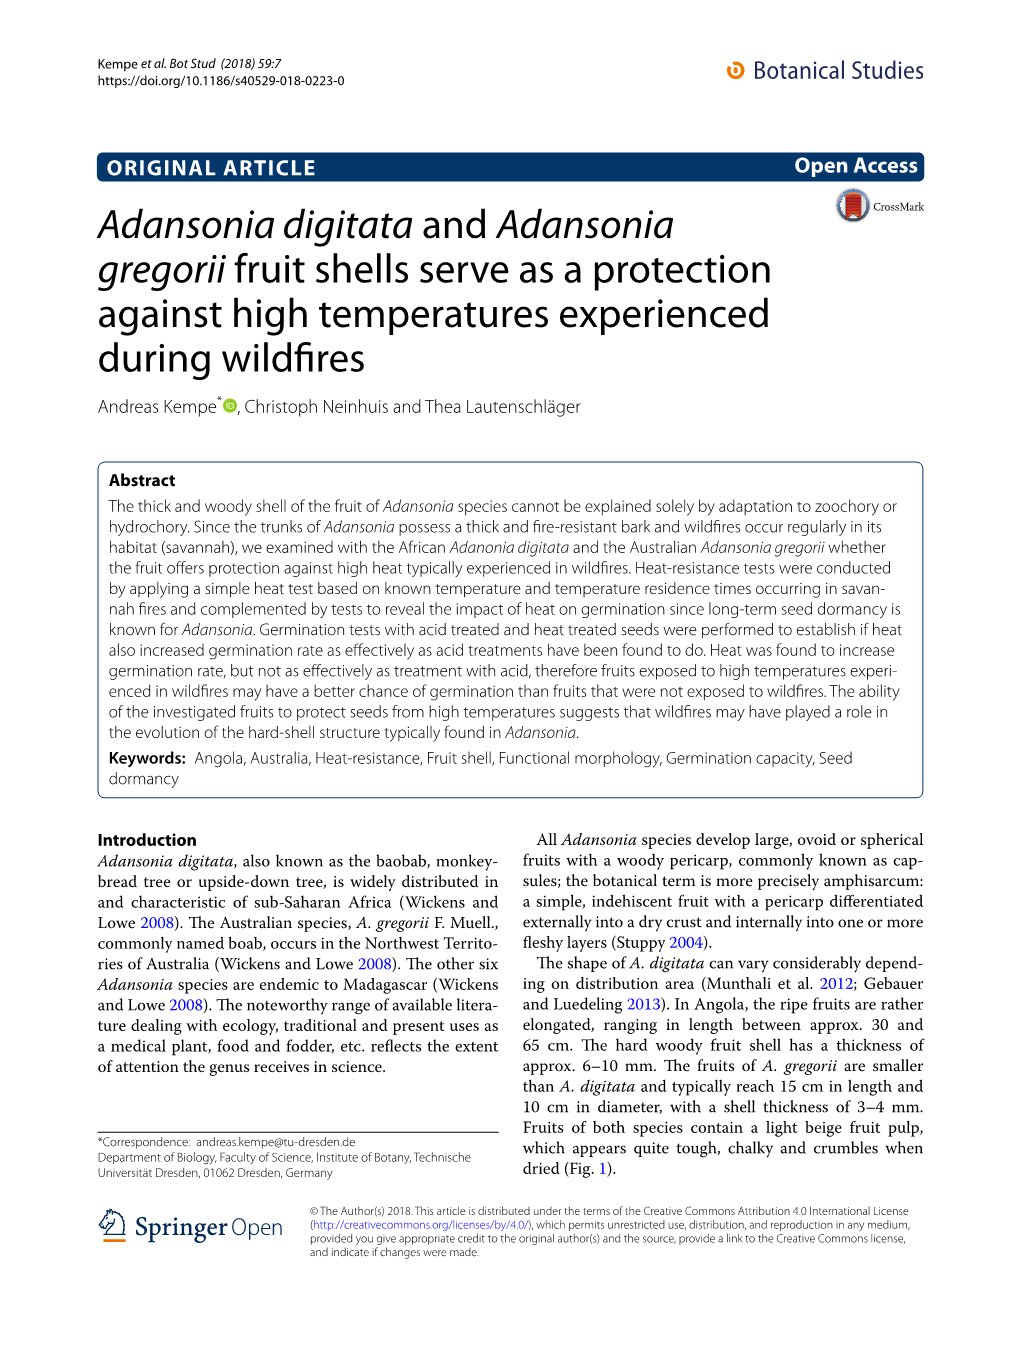 Adansonia Digitata and Adansonia Gregorii Fruit Shells Serve As A